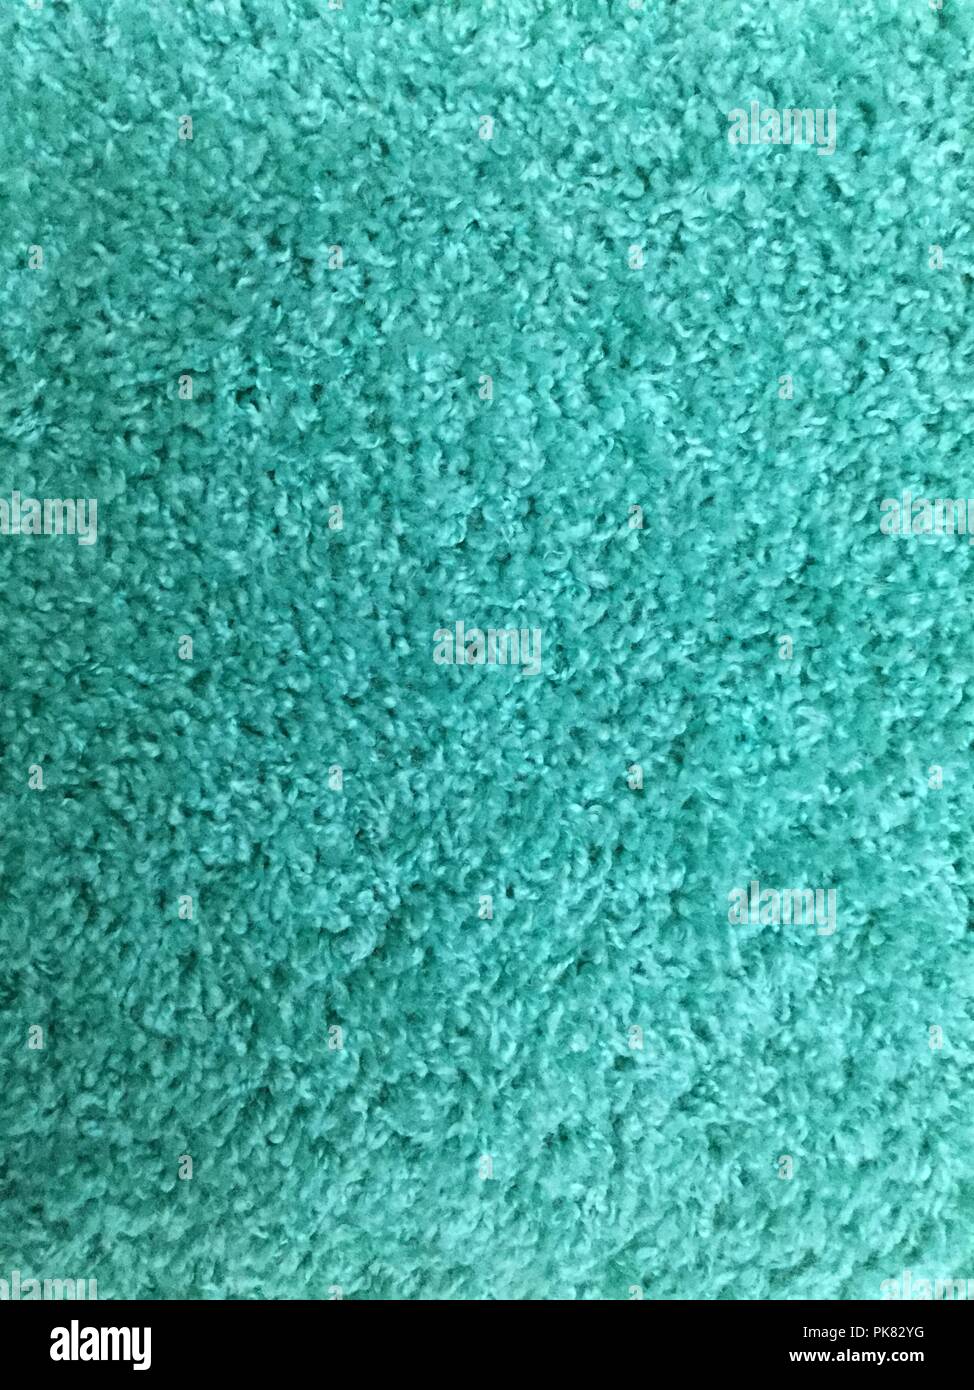 Aqua carpet closeup showing textures, background. Stock Photo